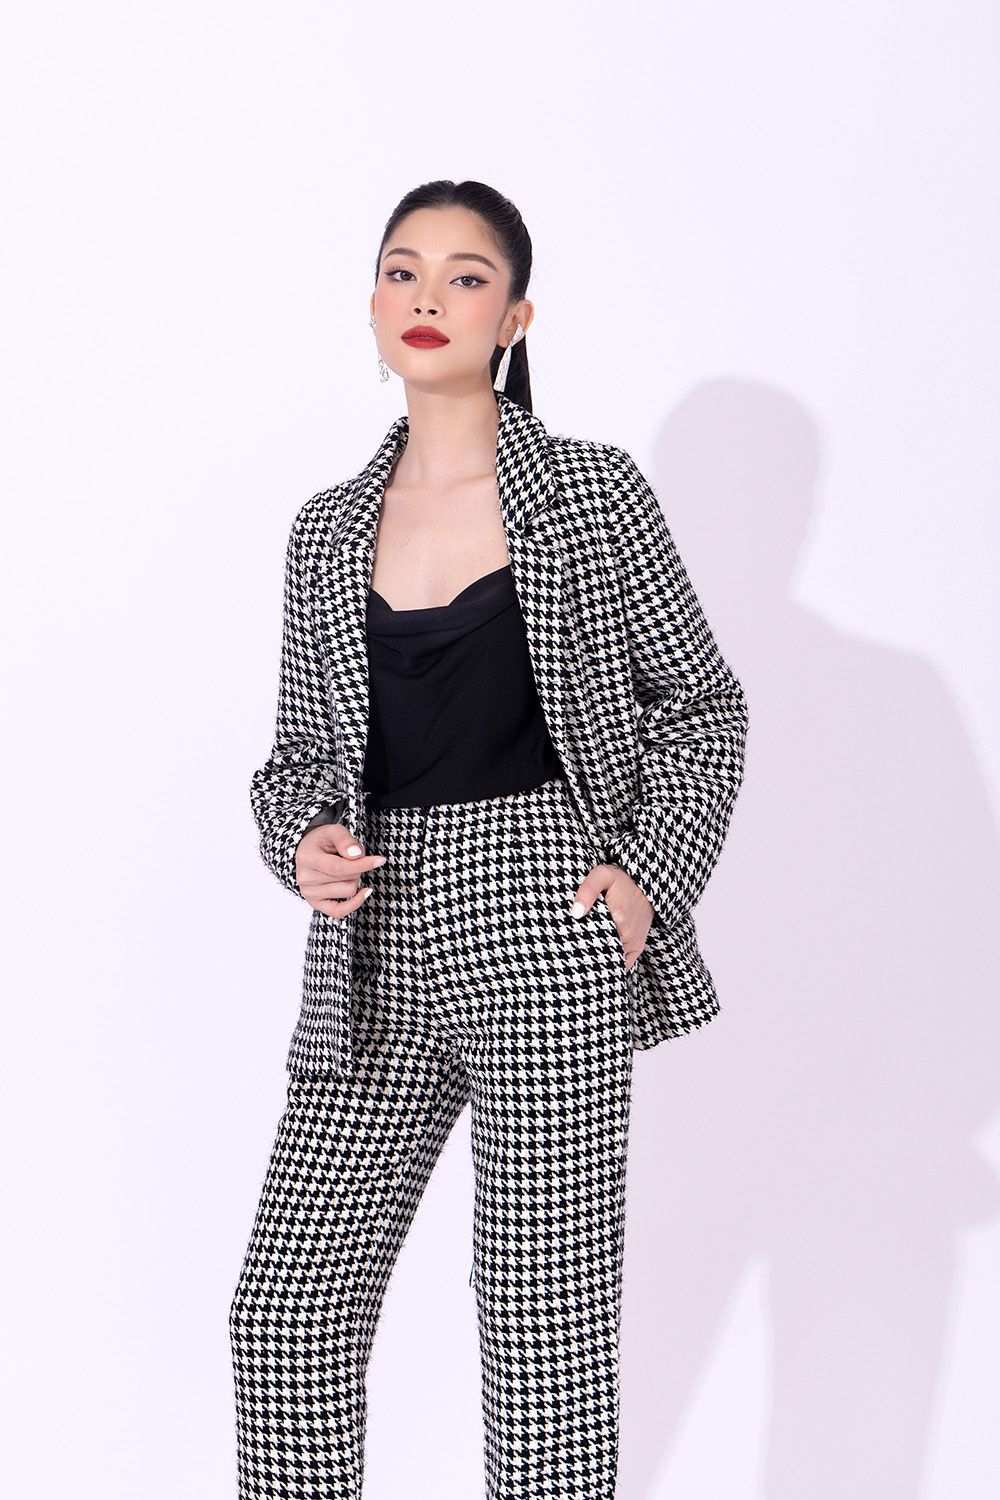 Áo Vest Khoác Nữ Blazer Sọc Caro Dài Tay - TFA100 - Tiên Fashion